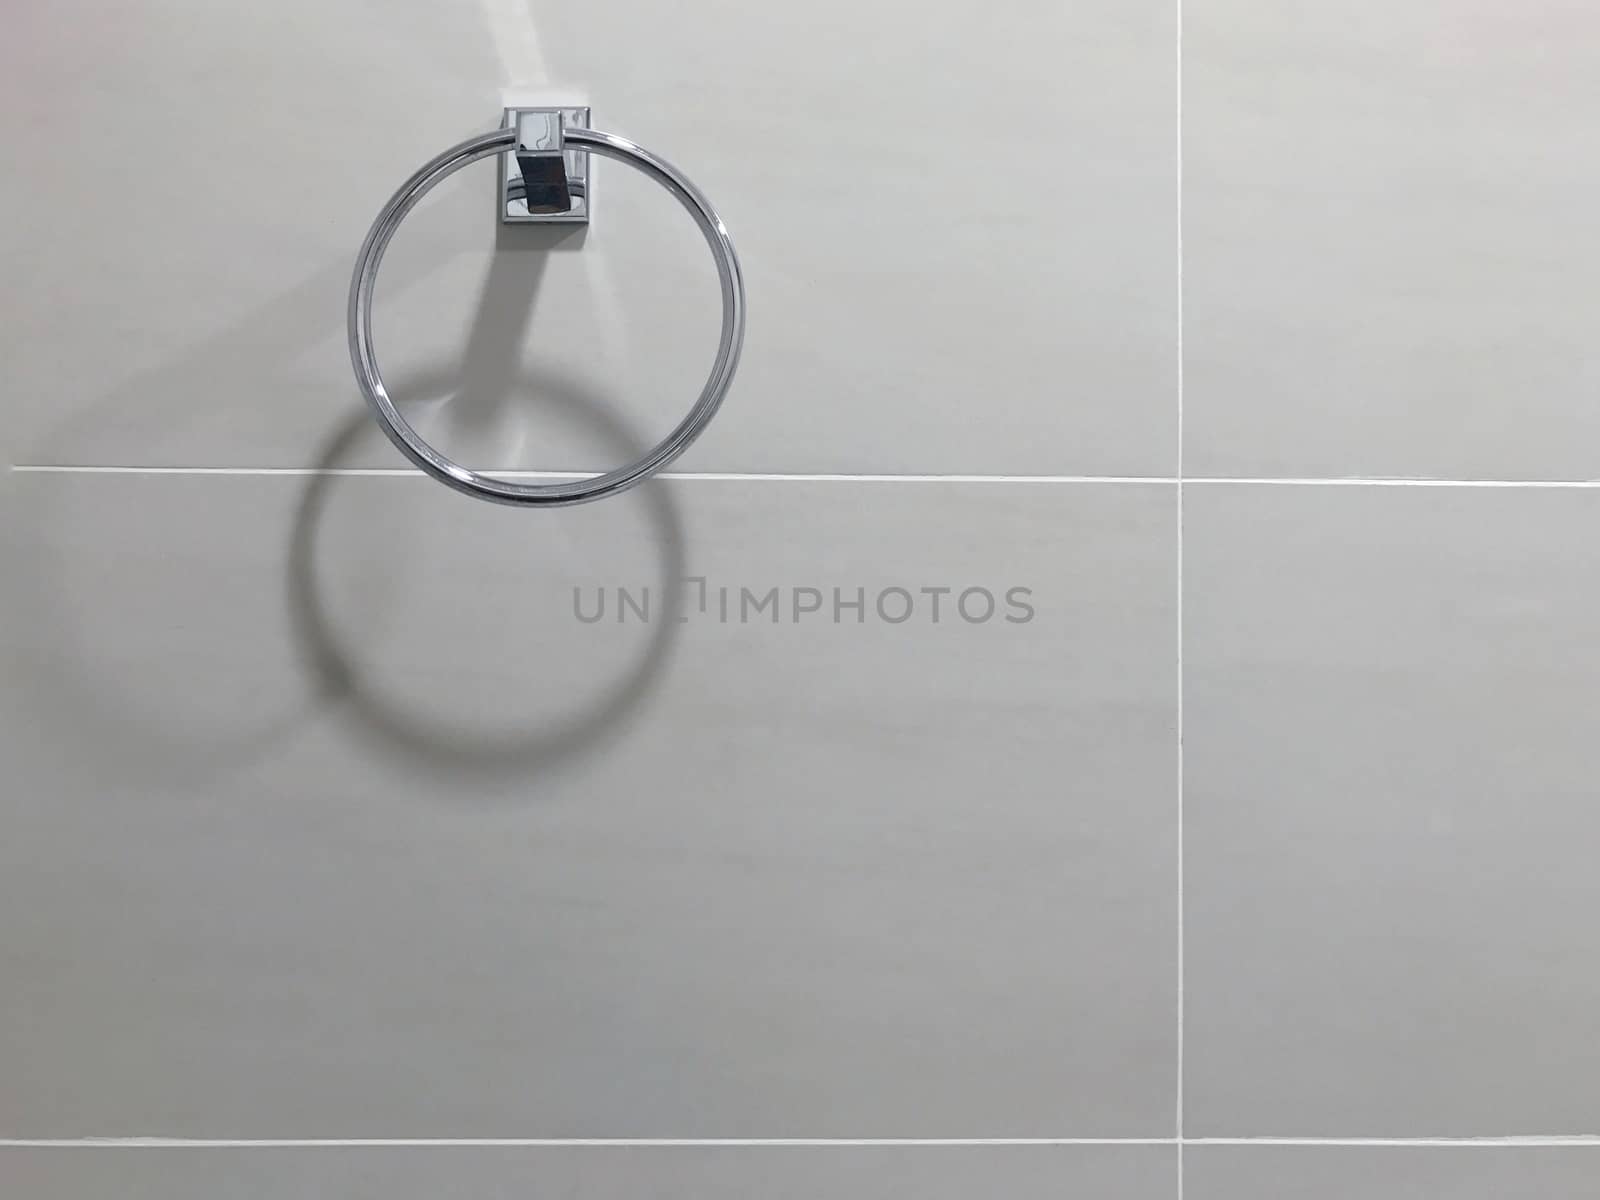 Loop for hanging round towel stainless steel toilet, wall hanging loop by cgdeaw